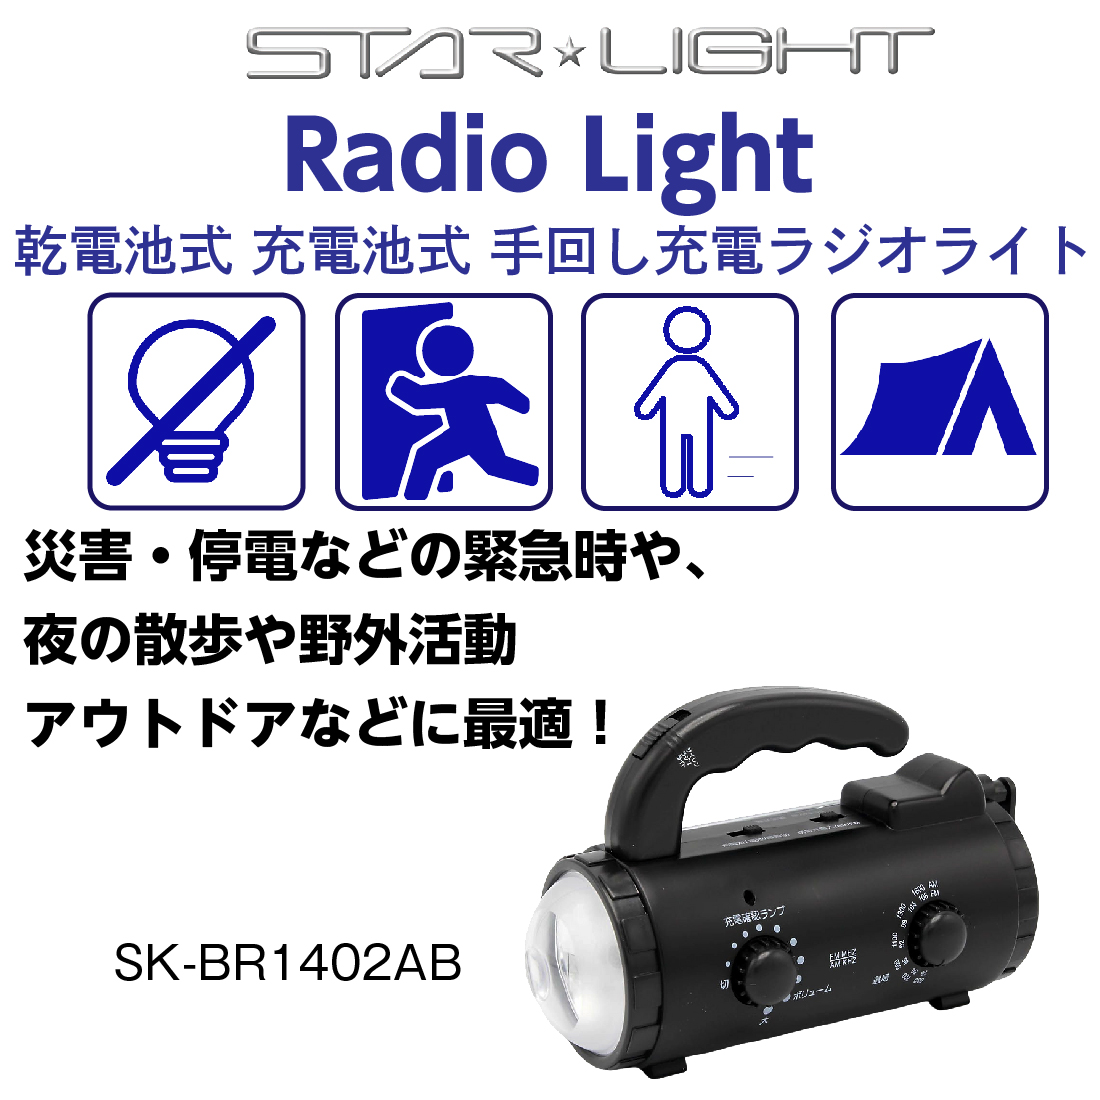 SK-BR1402AB 乾電池式/充電池式/手回し充電ラジオライト 給電可能 LED